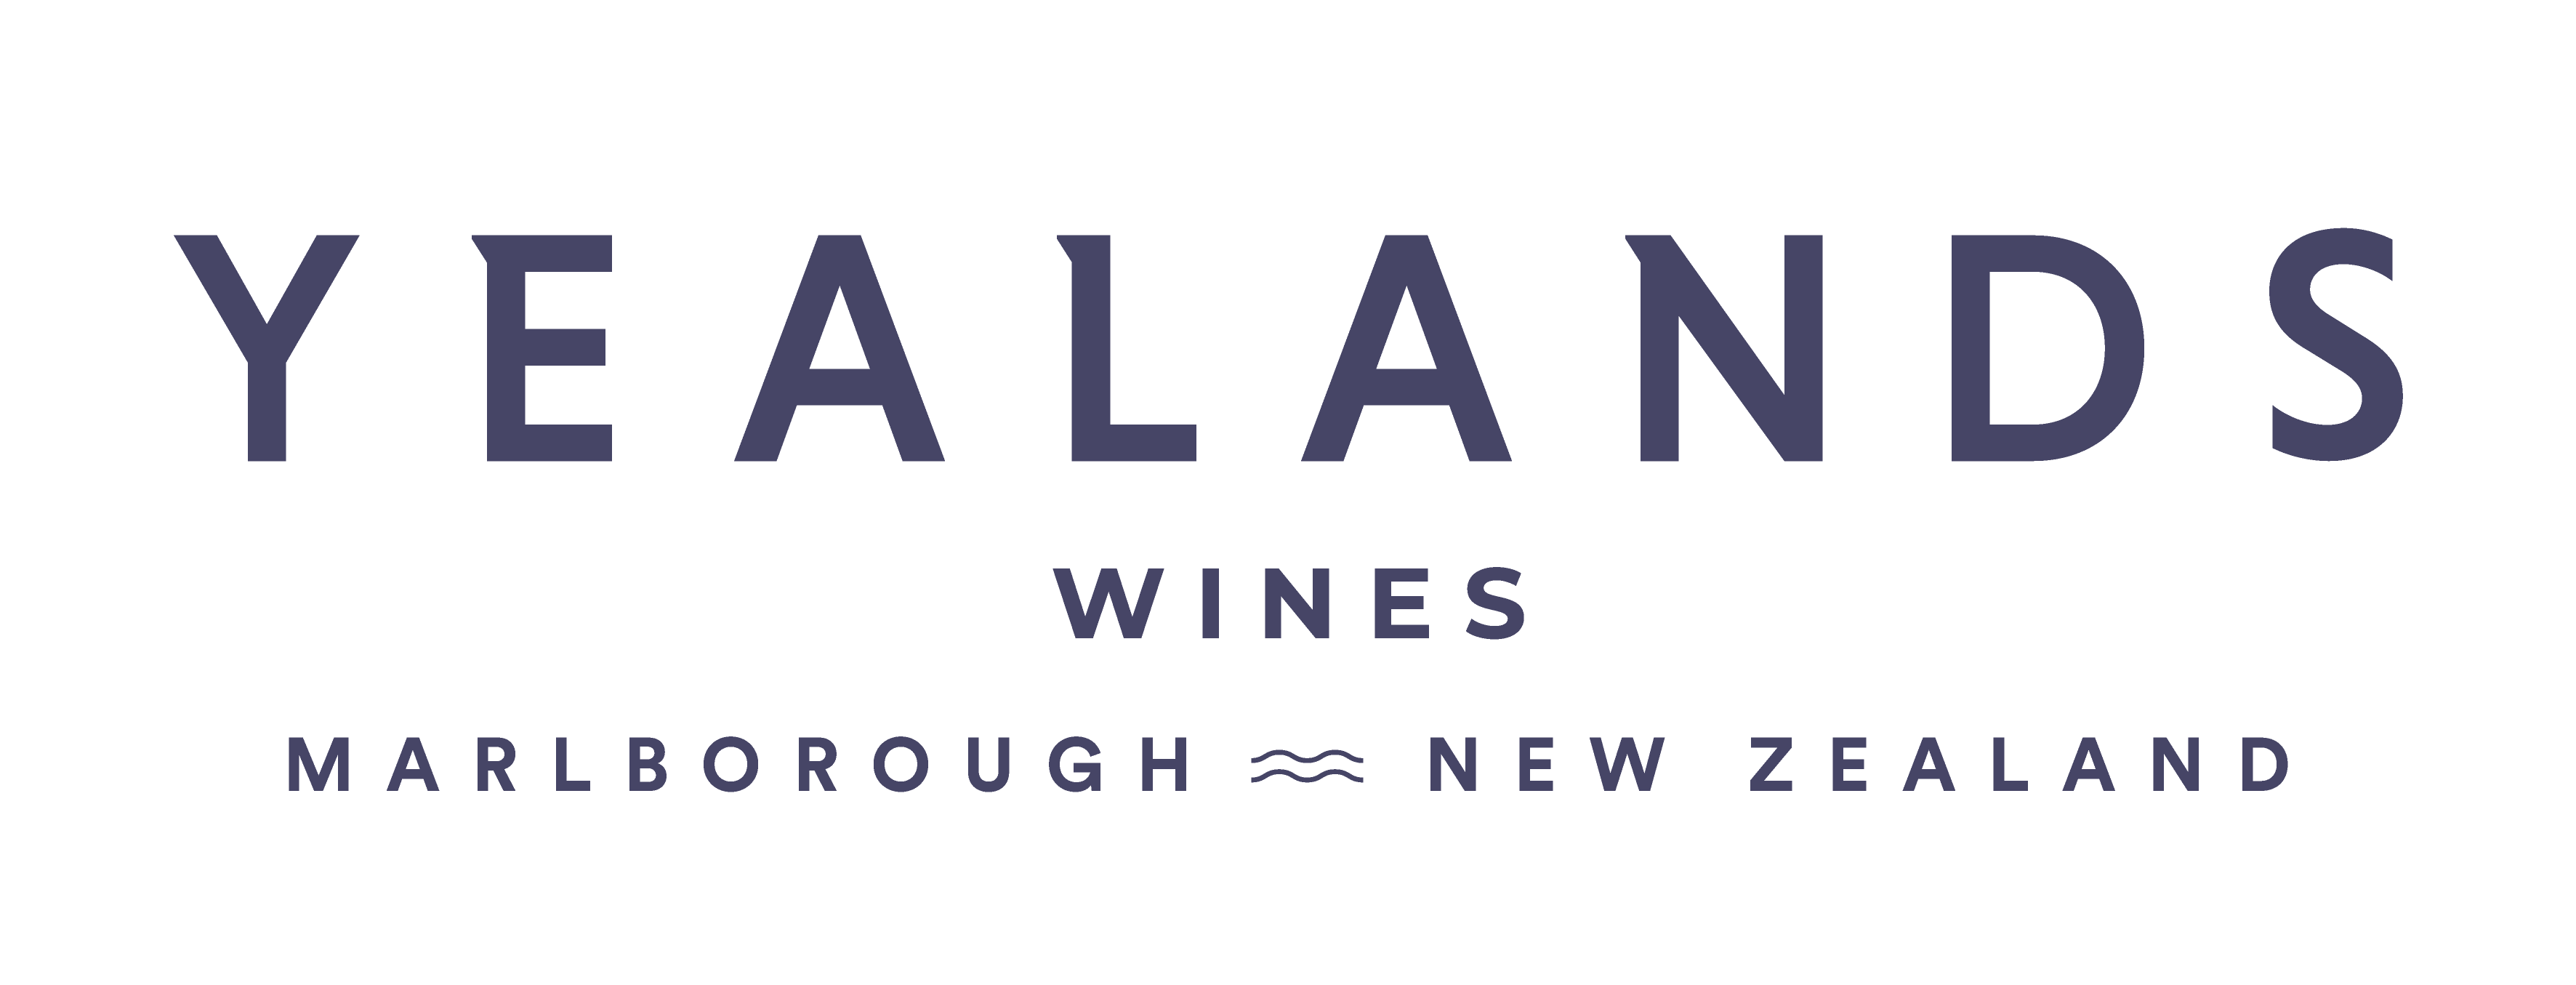 Yealands Wines New Zealand